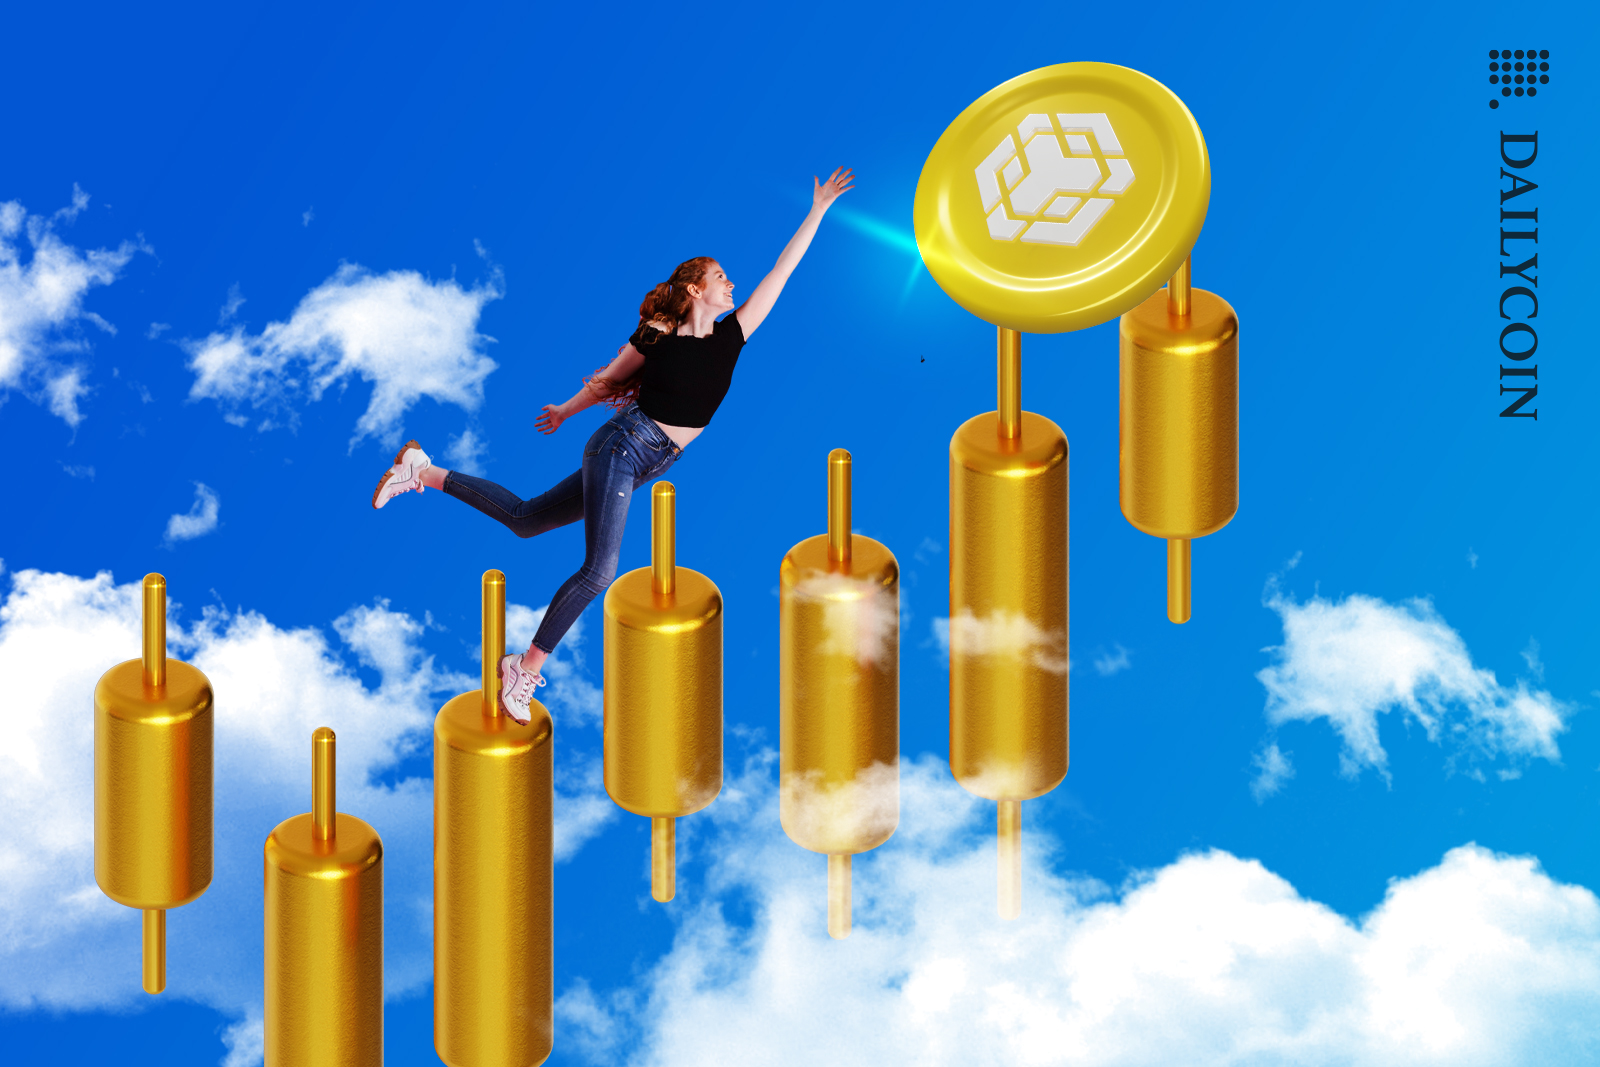 Woman jumping on candlesticks chart reaching for BNB token.